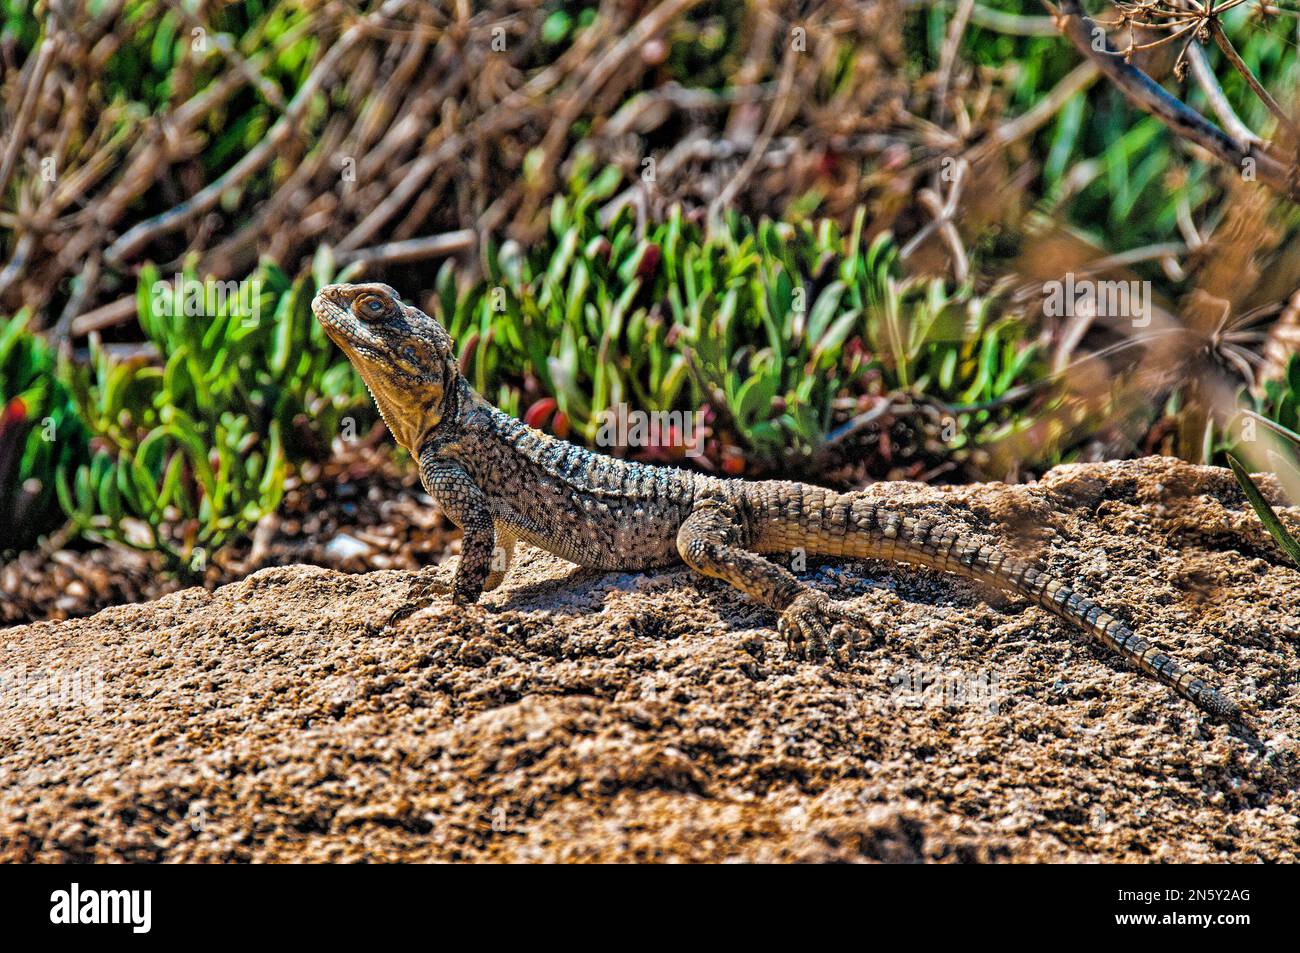 Lizard running on hot rocks among green bushes Stock Photo